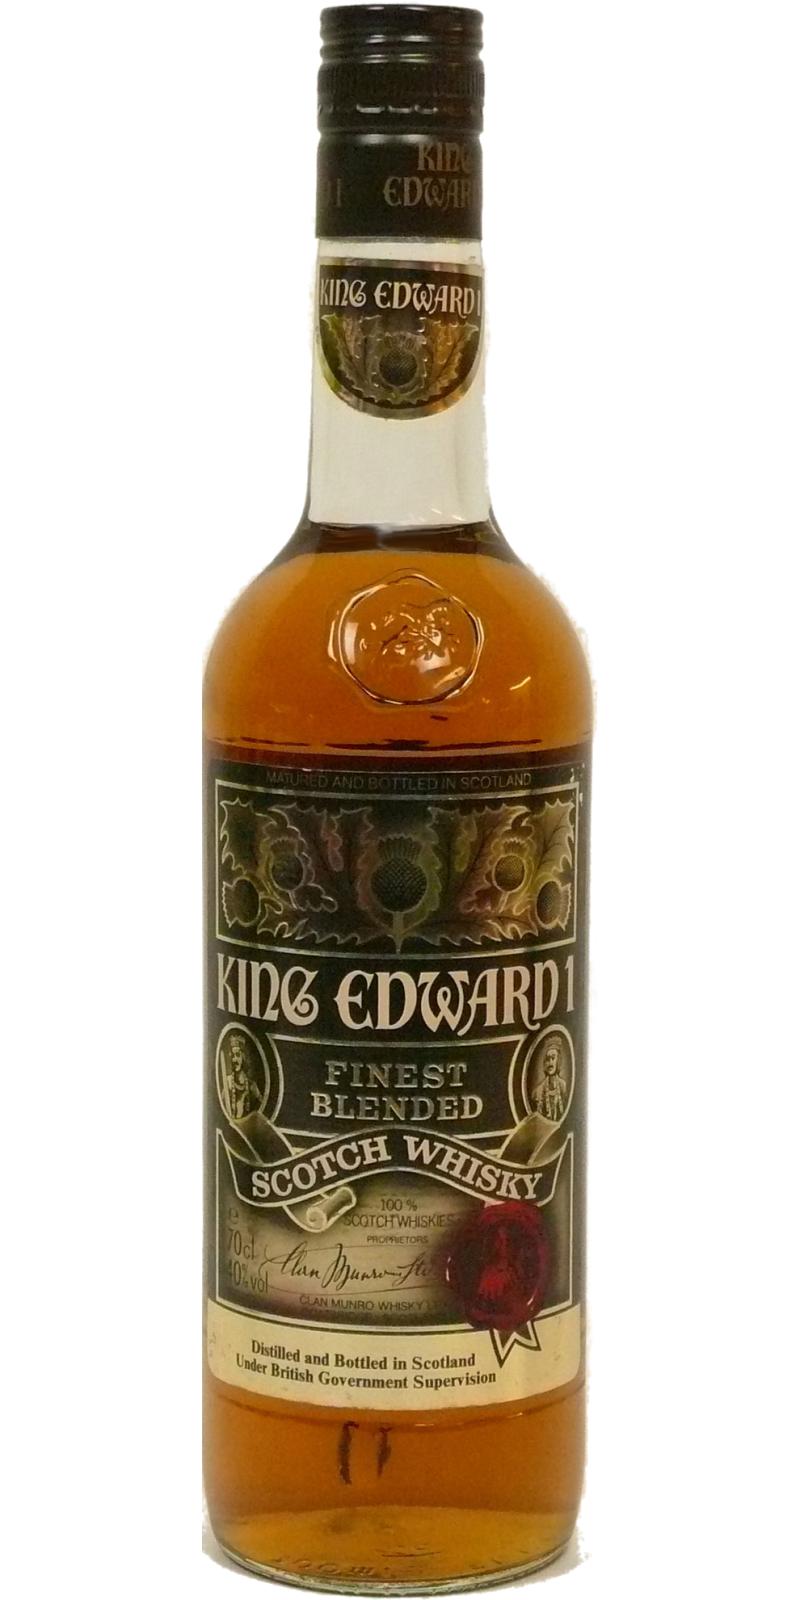 King Edward I Finest Blended Scotch Whisky 40% 700ml